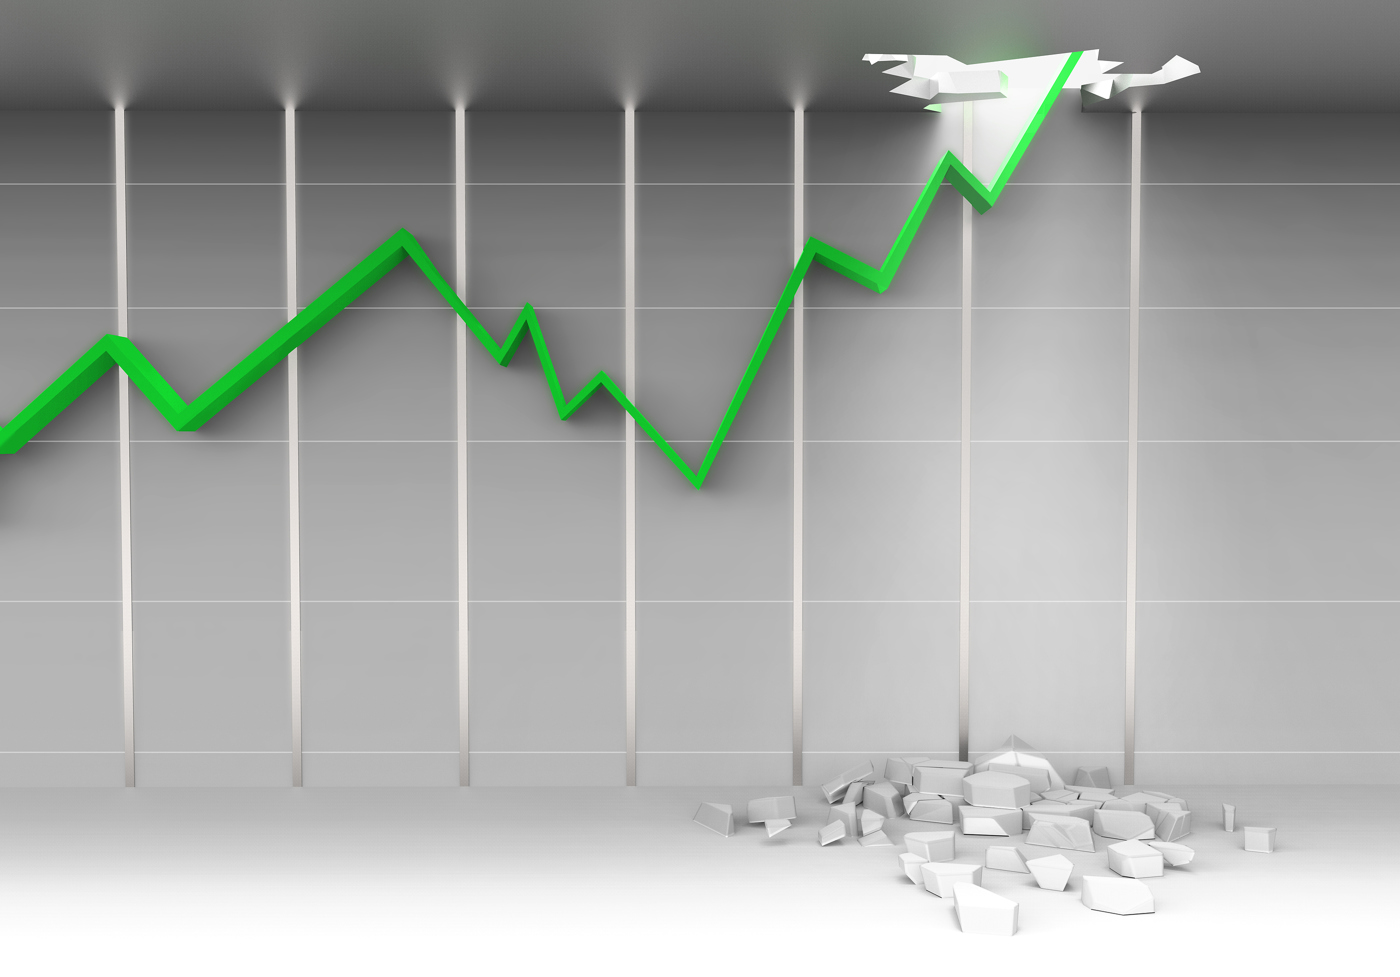 Arrow pointing up, Stock price increasing, Bullish stock price movement